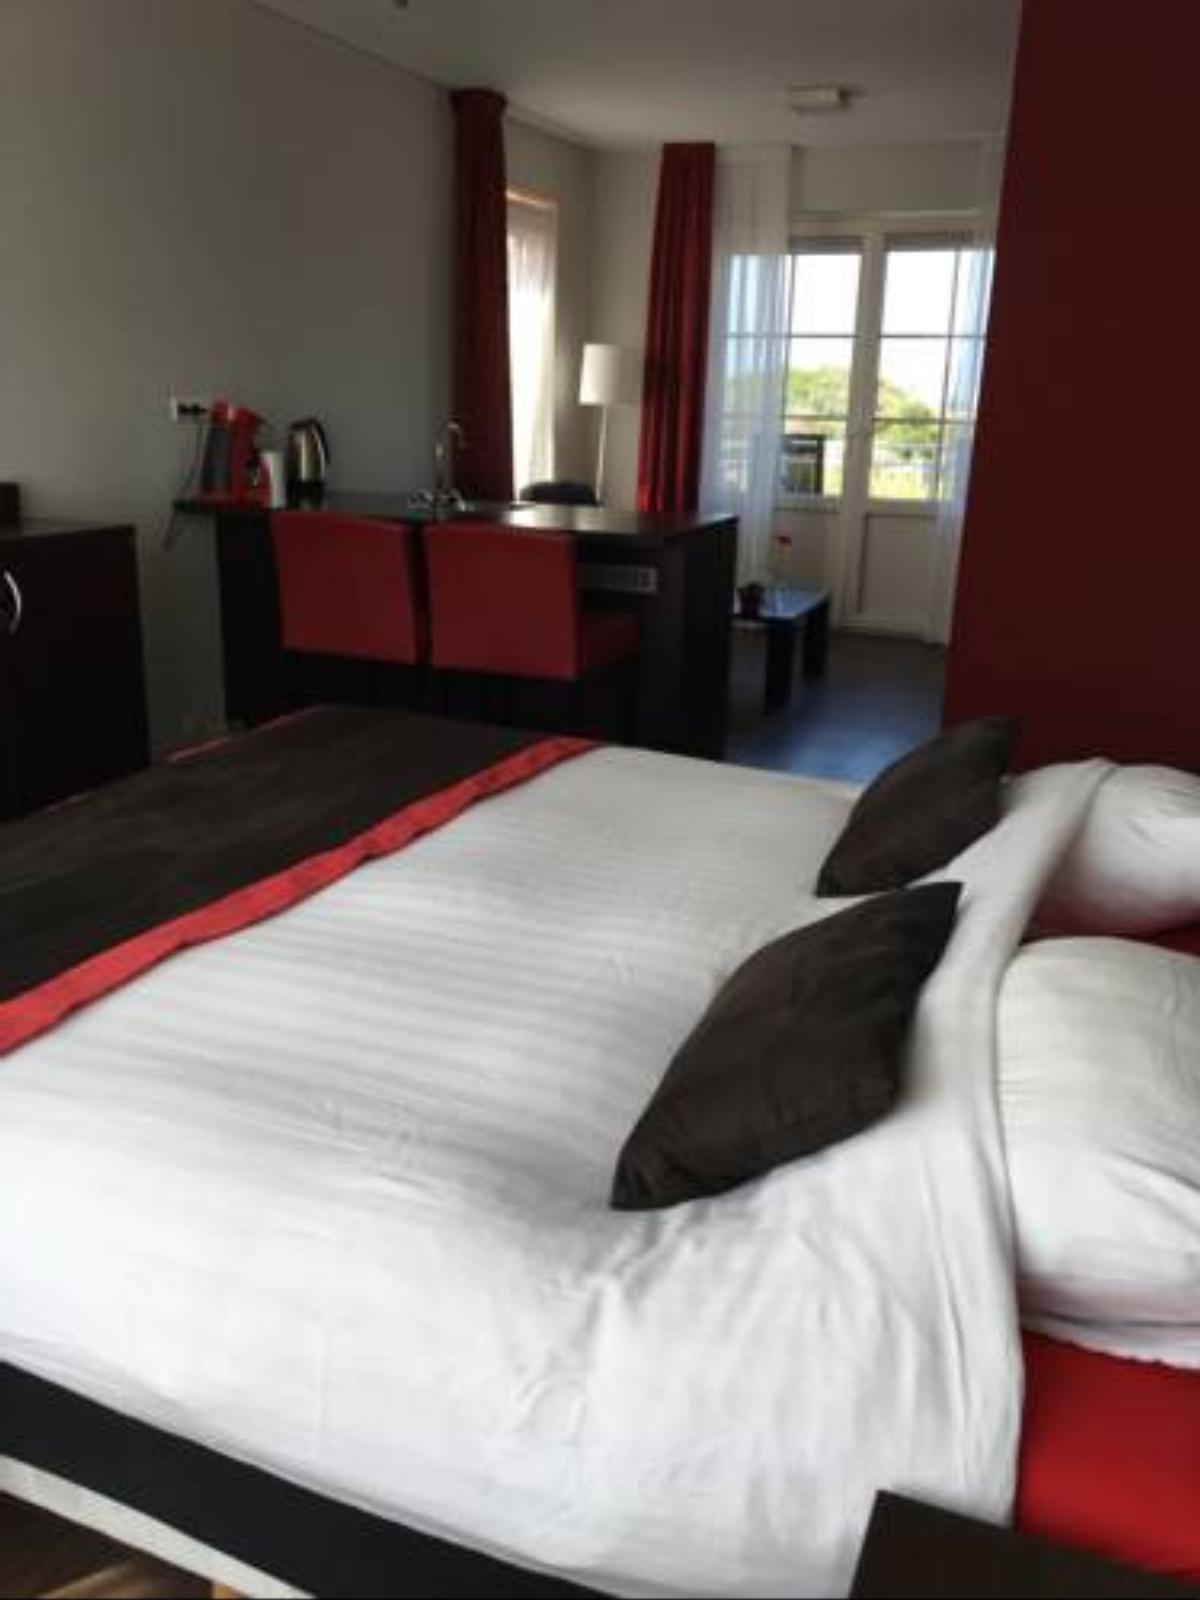 Bed & Breakfast Huys aan zee Hotel Domburg Netherlands